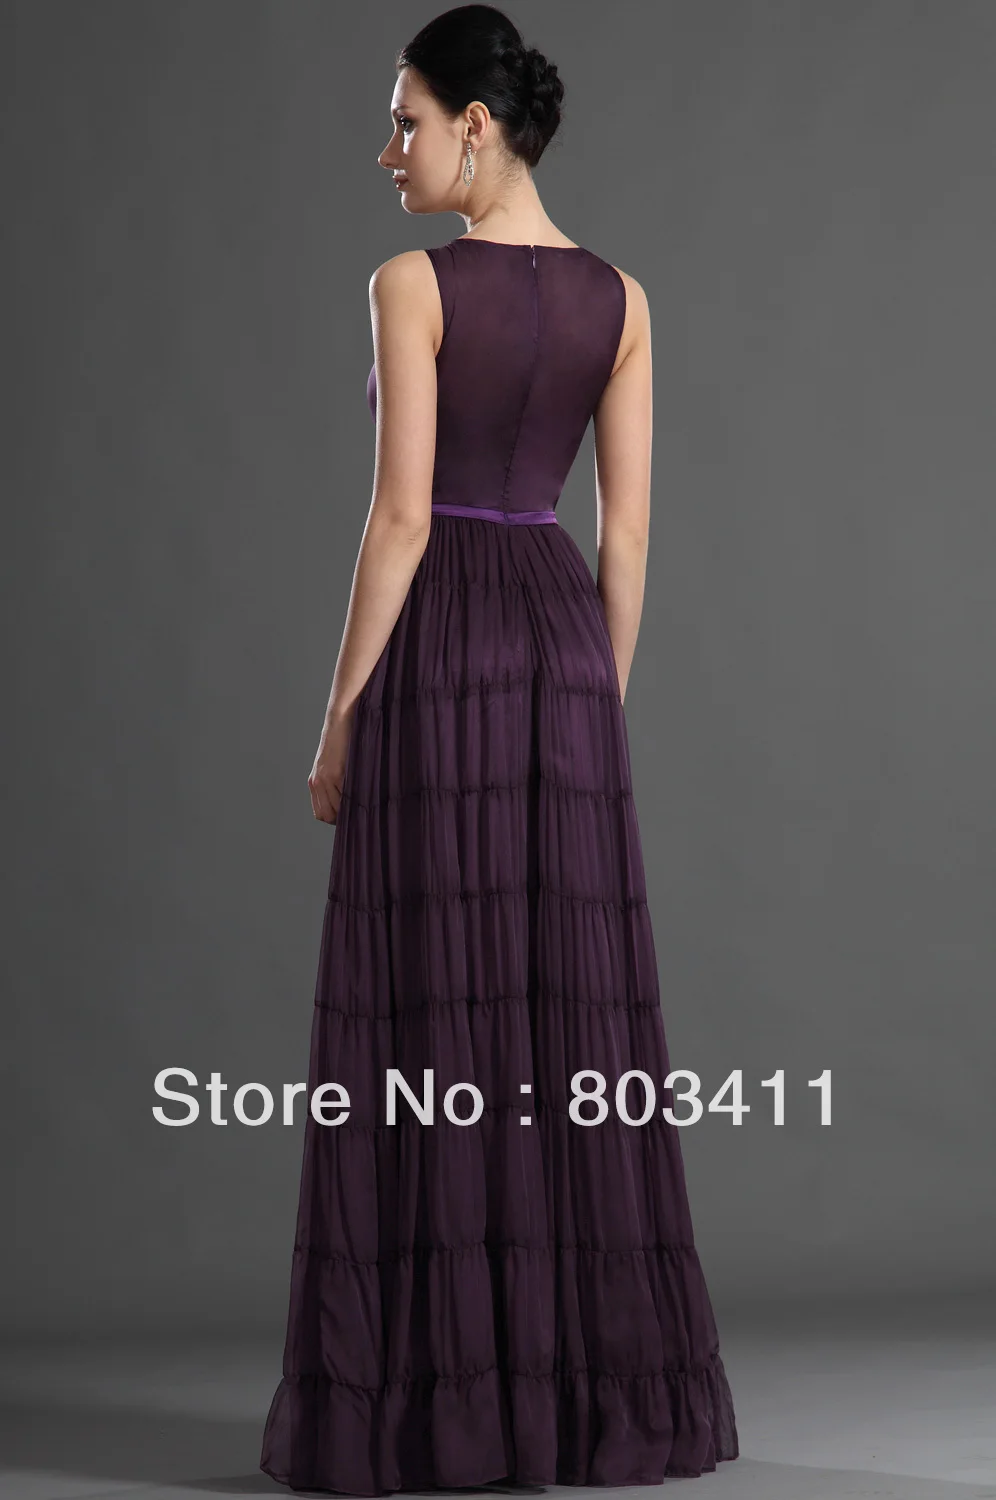 New Designer Arrival Elegant Sleeveless Tiered Skirt Grape Evening Dress - Evening Dresses -